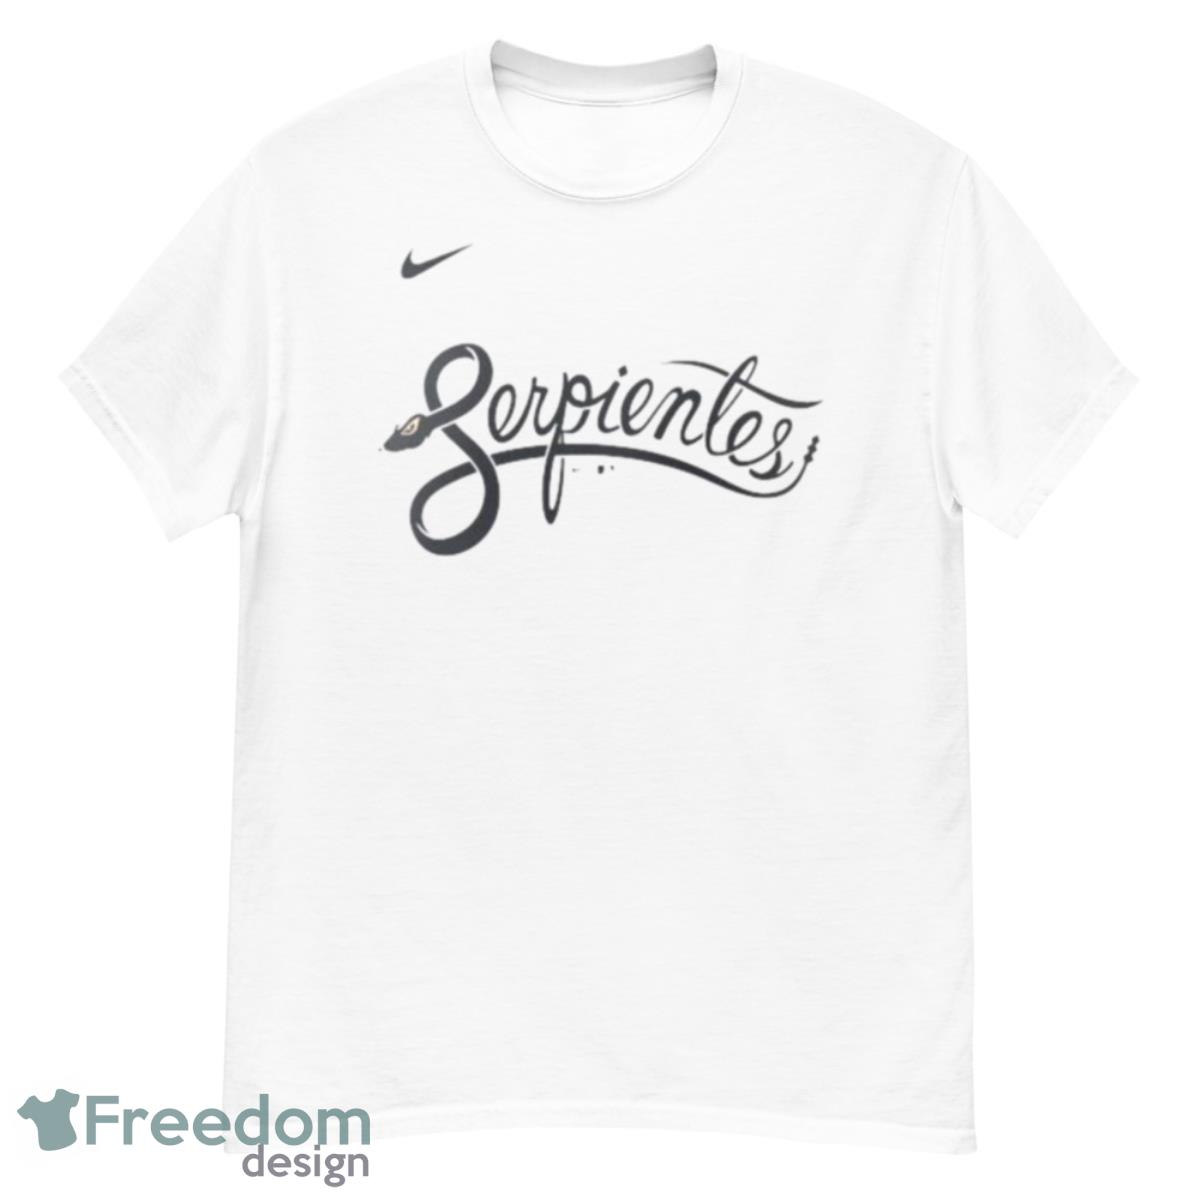 Arizona Diamondbacks reveal Nike City Connect 'Serpientes' jerseys